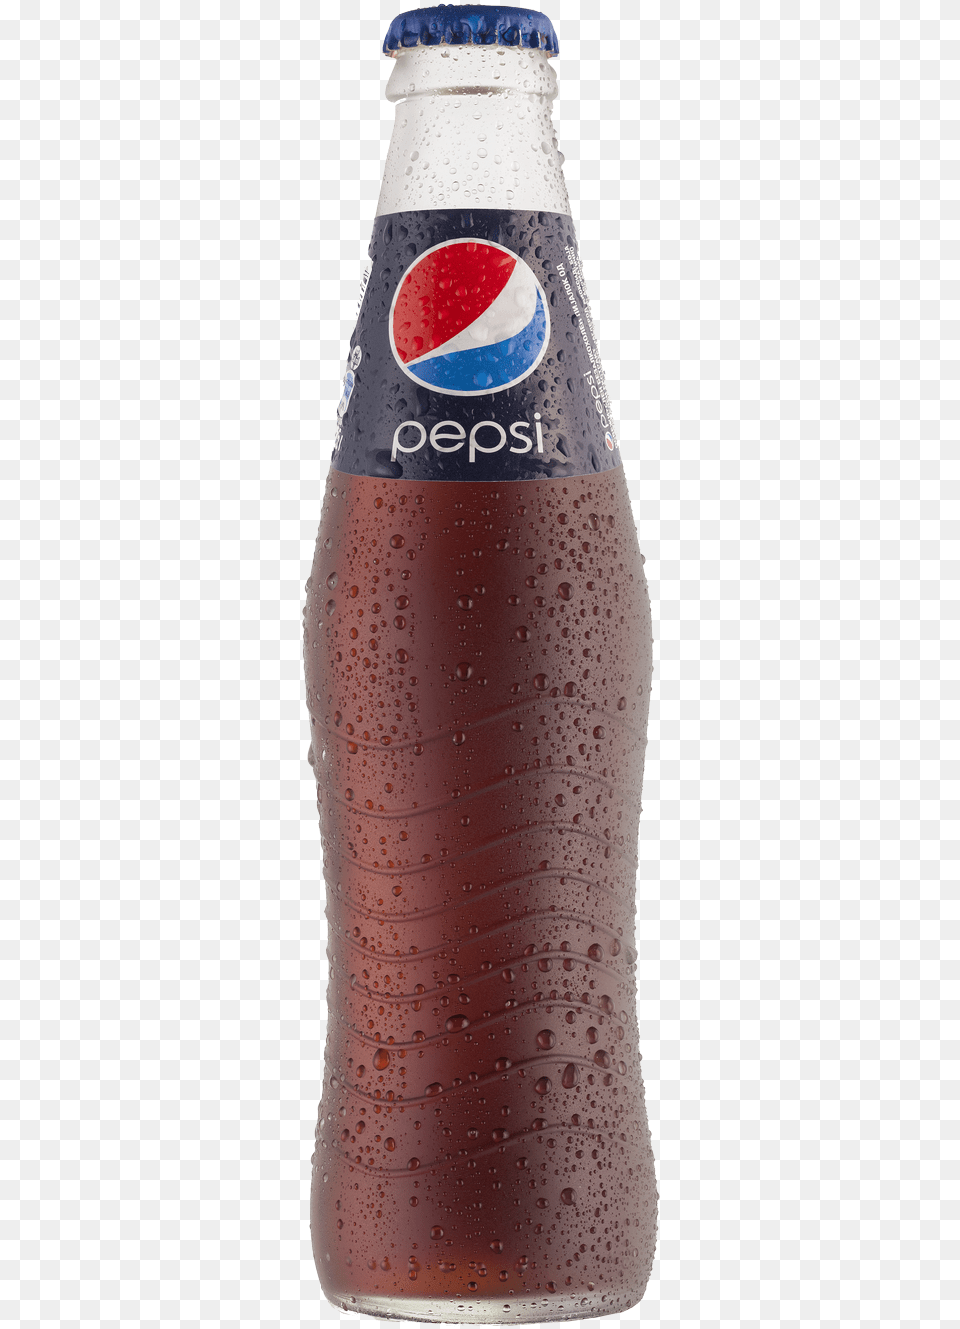 Pepsi Image Pepsi Regular Bottle, Alcohol, Beer, Beverage, Soda Png